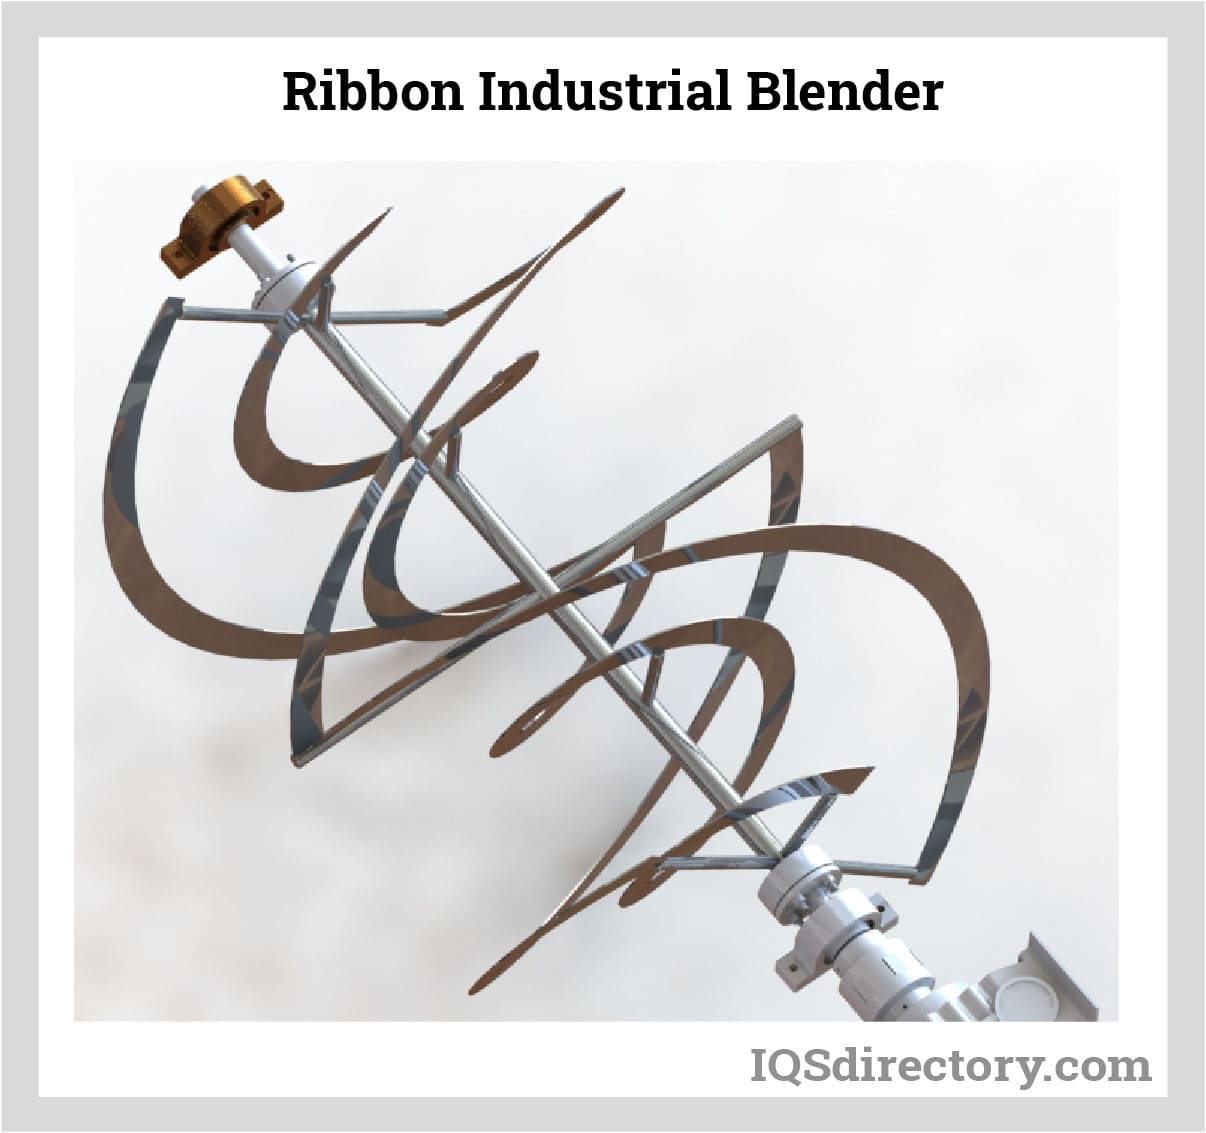 Ribbon Industrial Blender